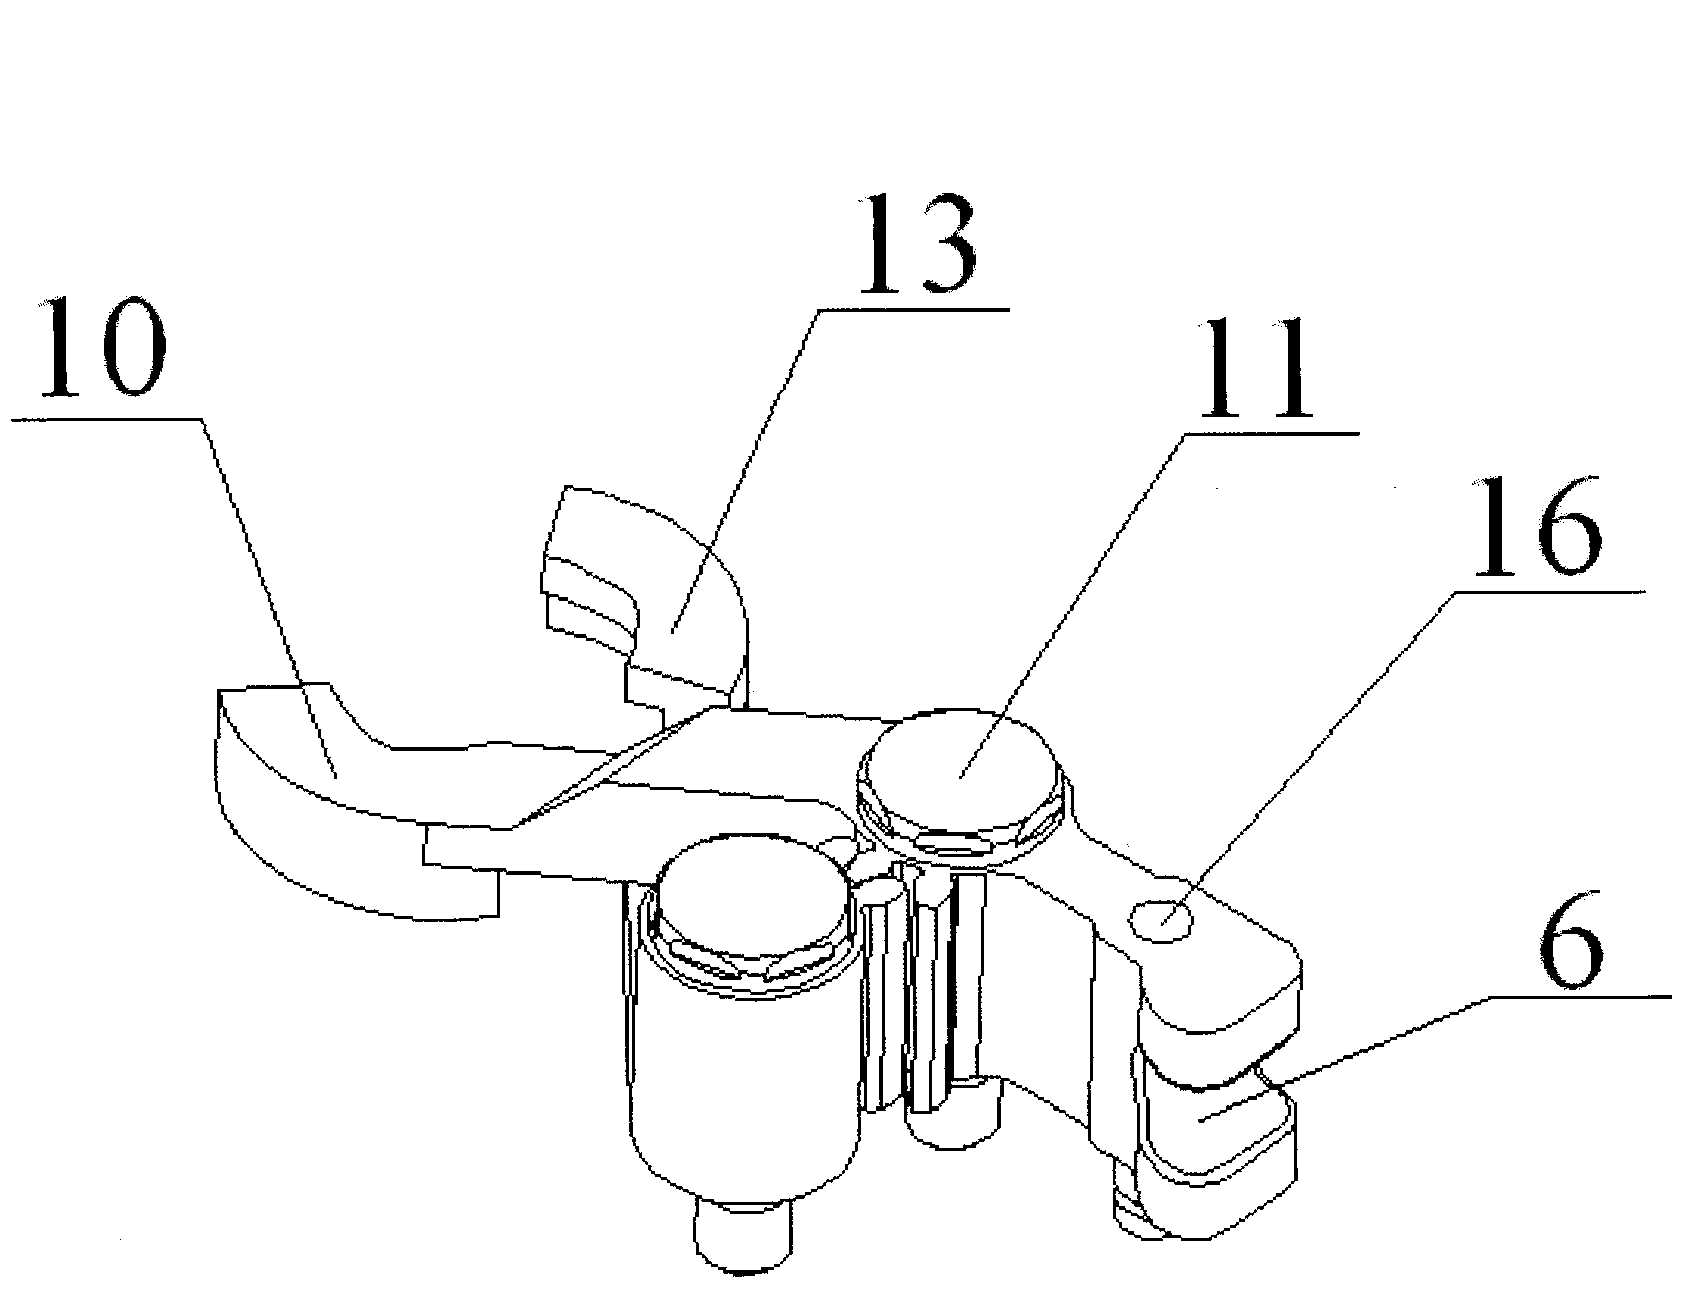 Bottle clamp mechanism